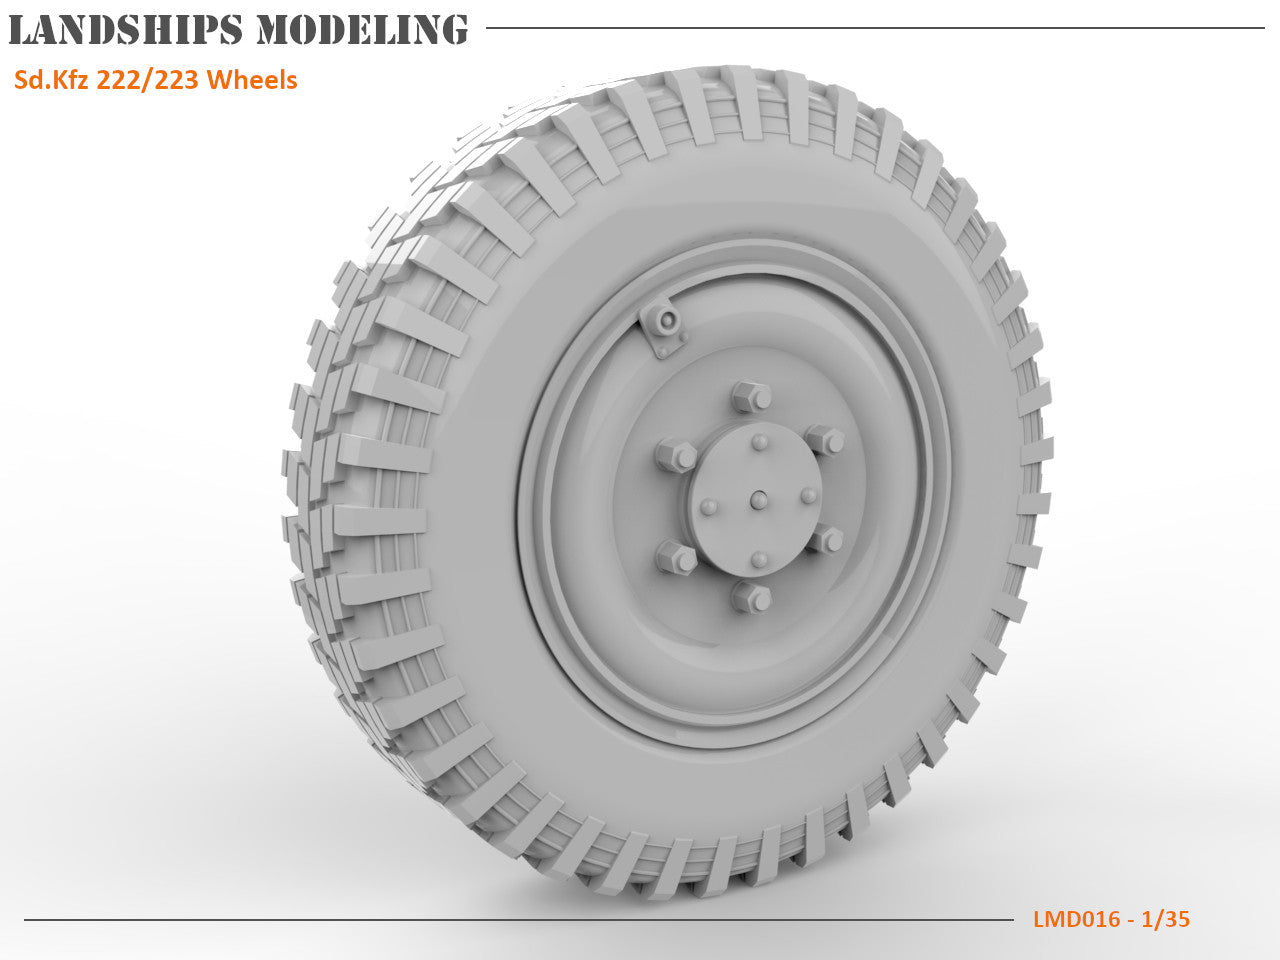 LMD016 - Sd.Kfz 222/223 Wheels For HobbyBoss Kits